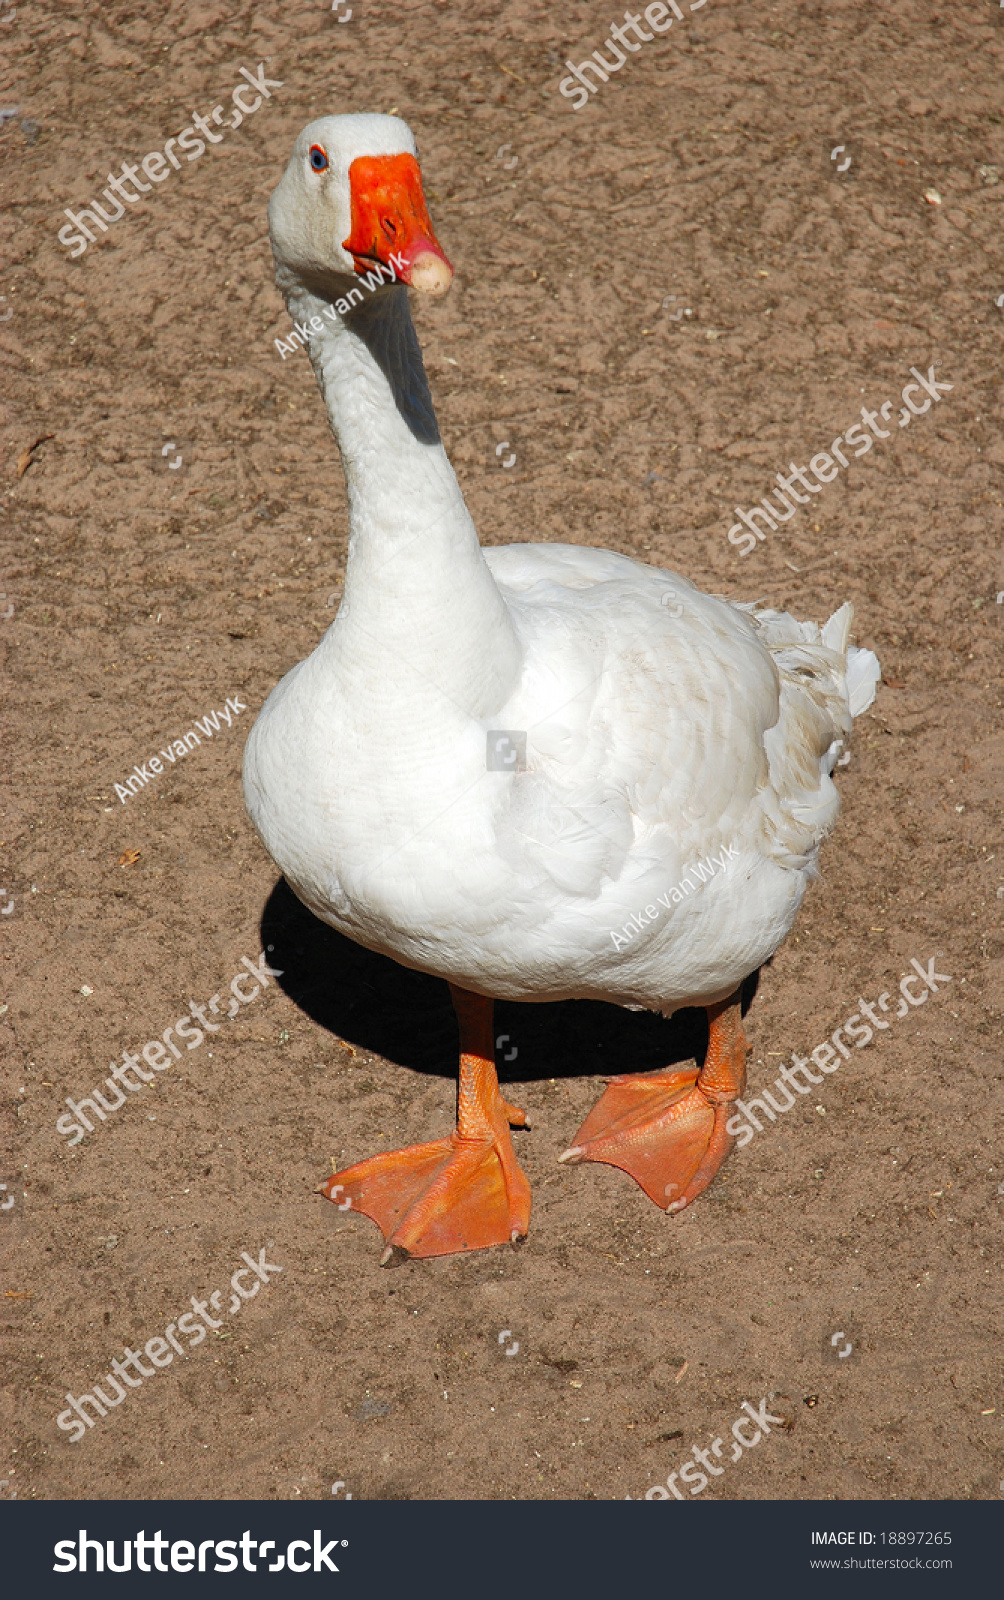 Big White Christmas Goose Orange Feet Stock Photo 18897265 - Shutterstock